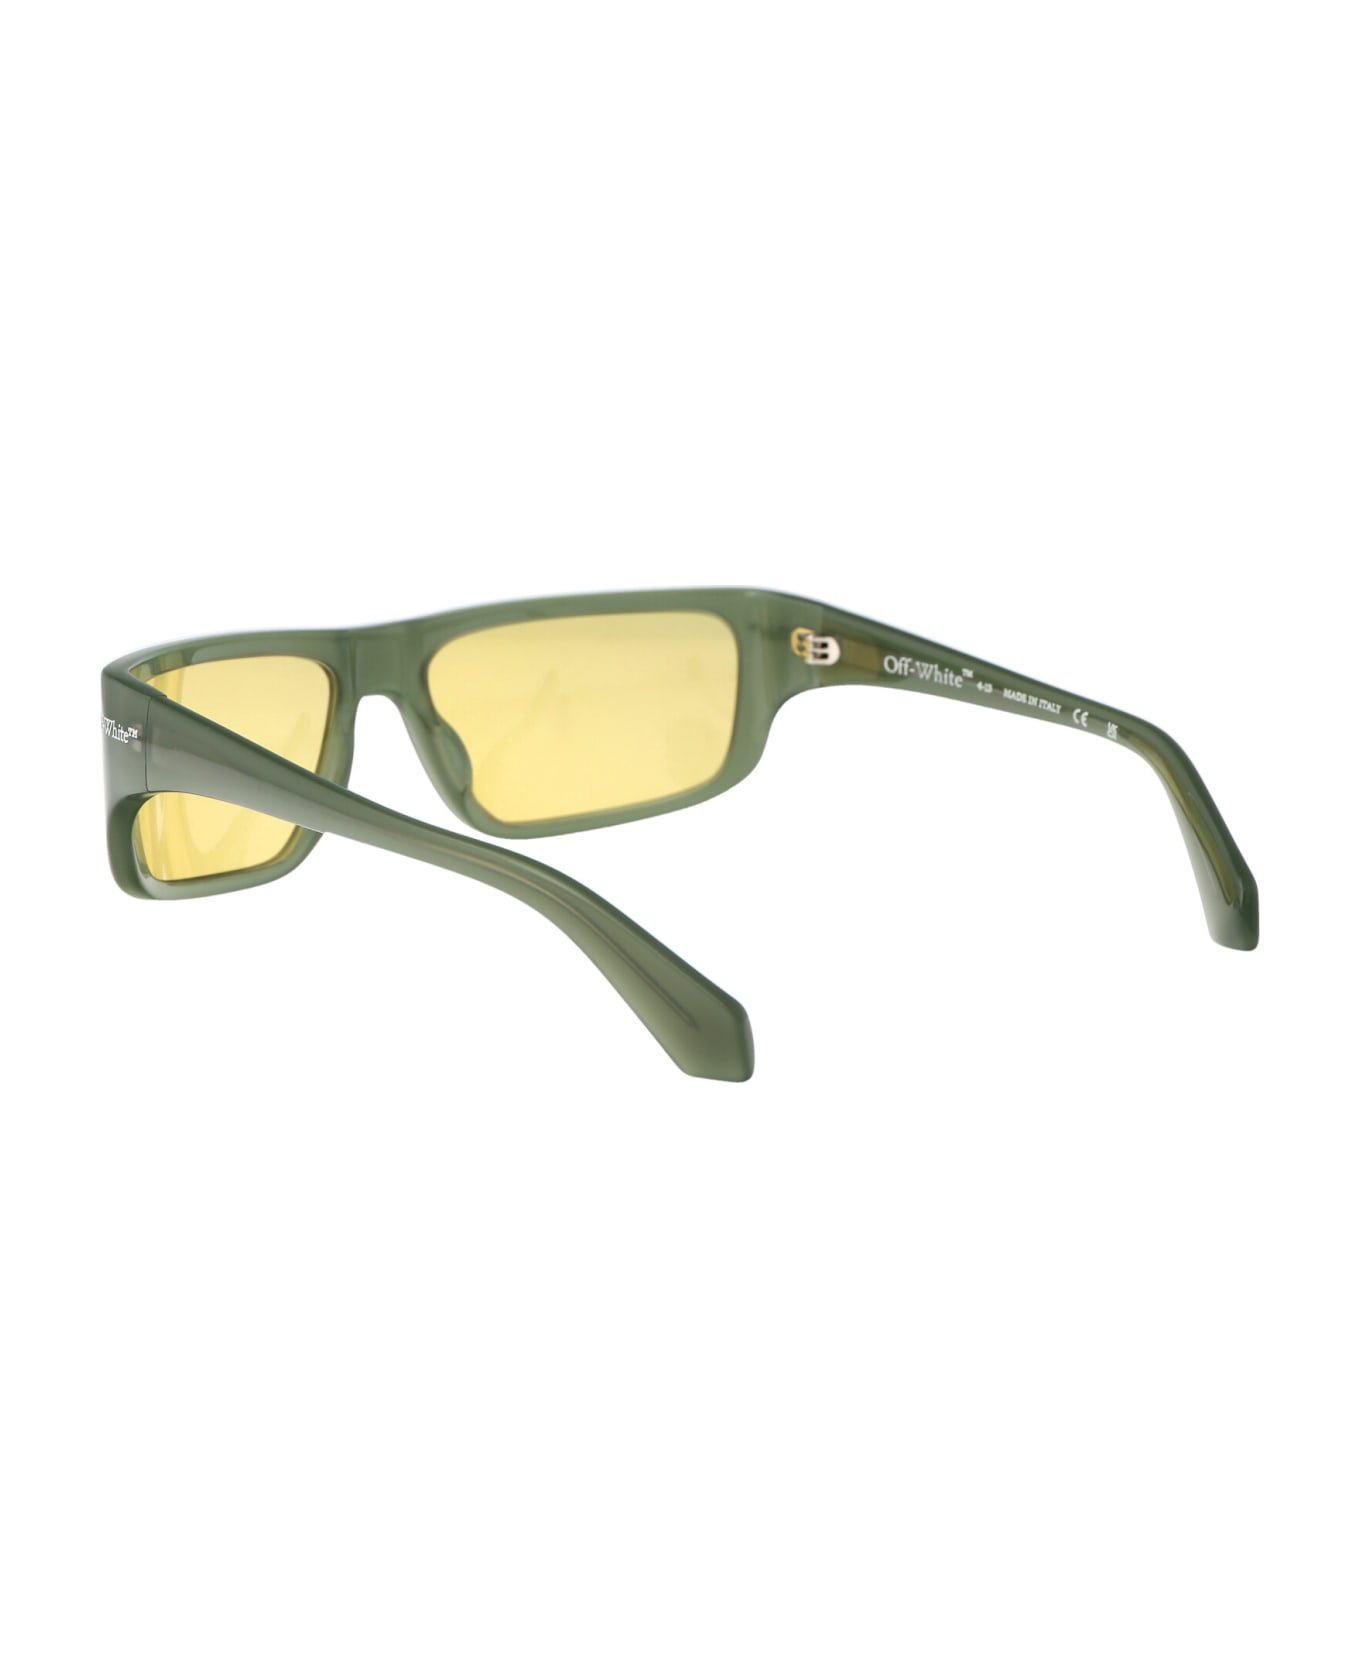 Off-White Bologna Sunglasses - 5518 SAGE GREEN